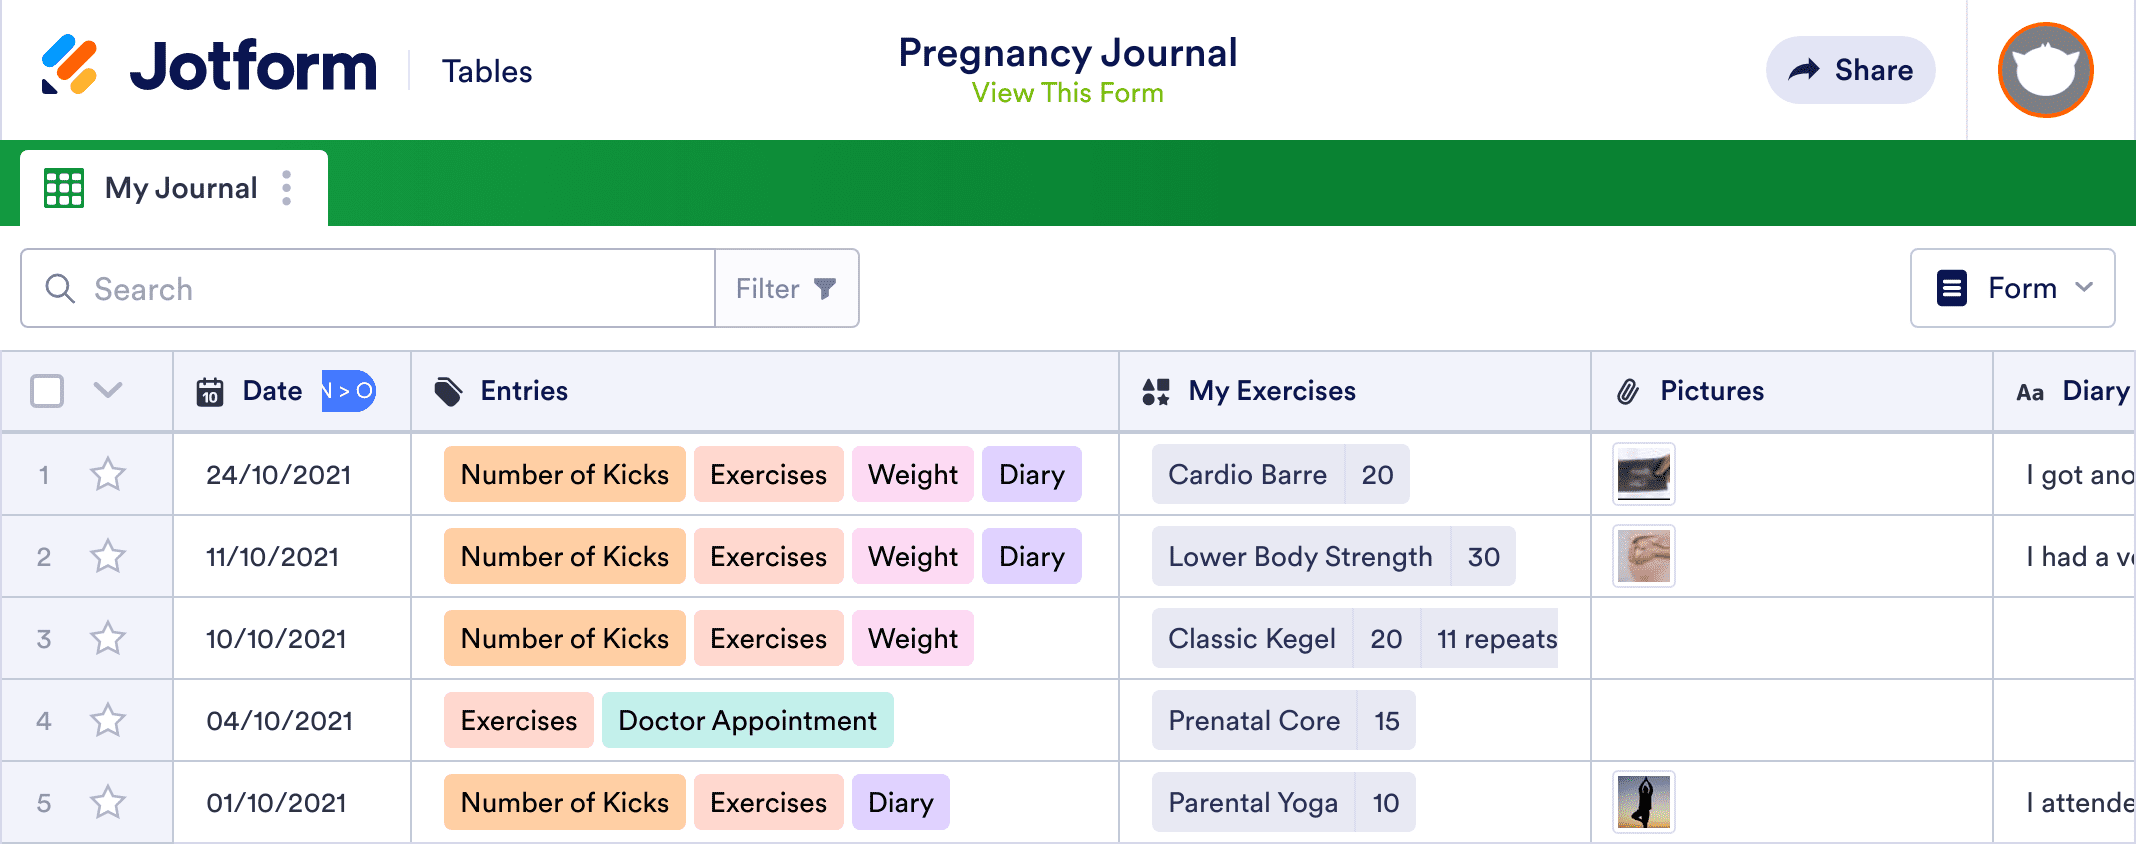 Pregnancy Journal Template | Jotform Tables